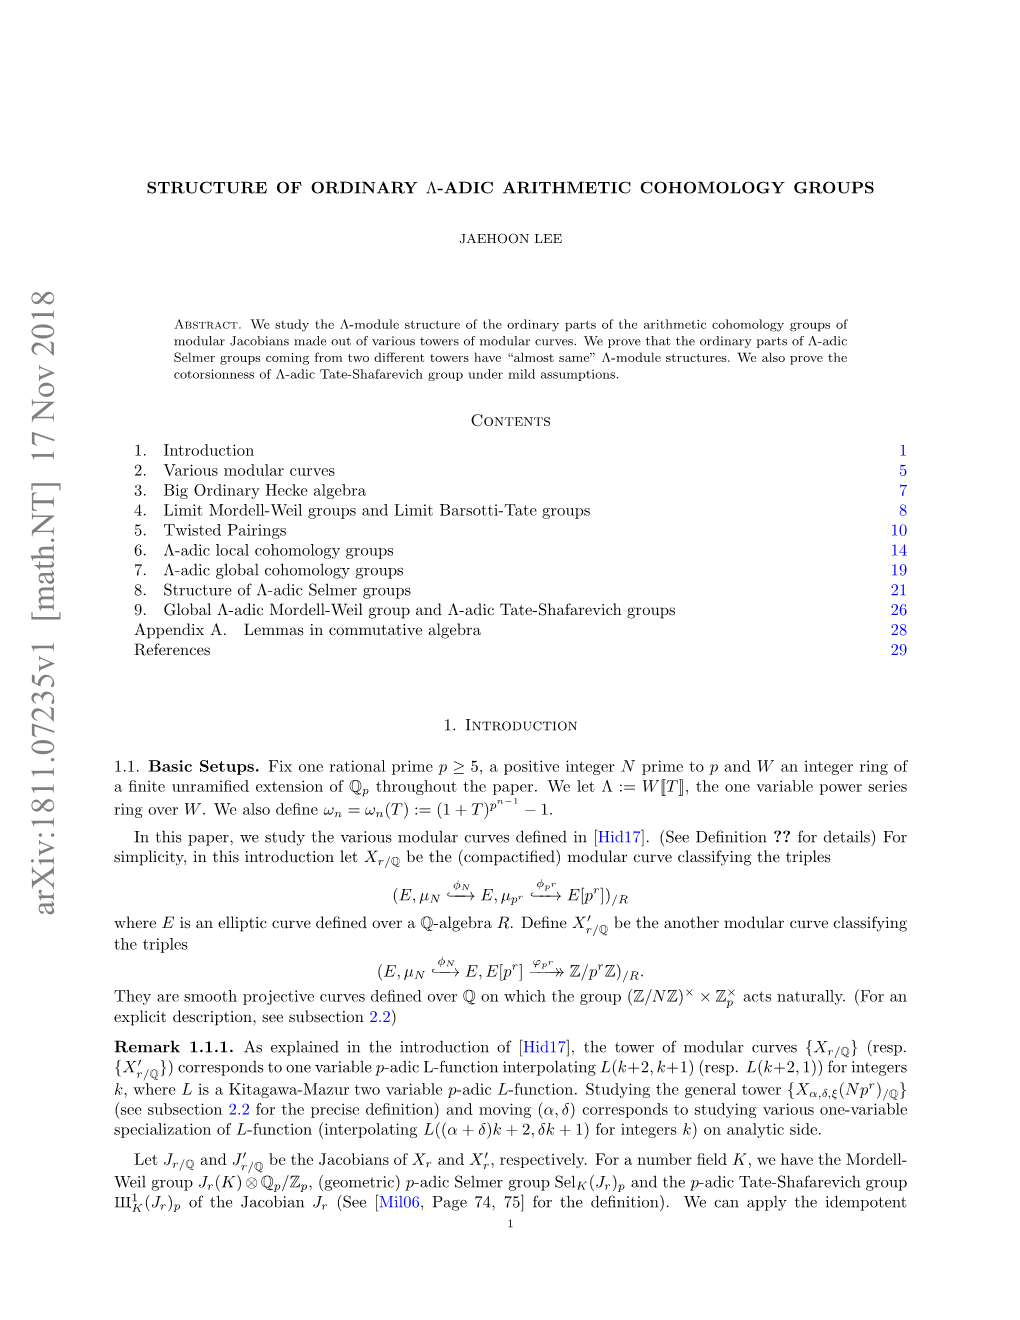 Structure of Ordinary $\Lambda $-Adic Arithmetic Cohomology Groups